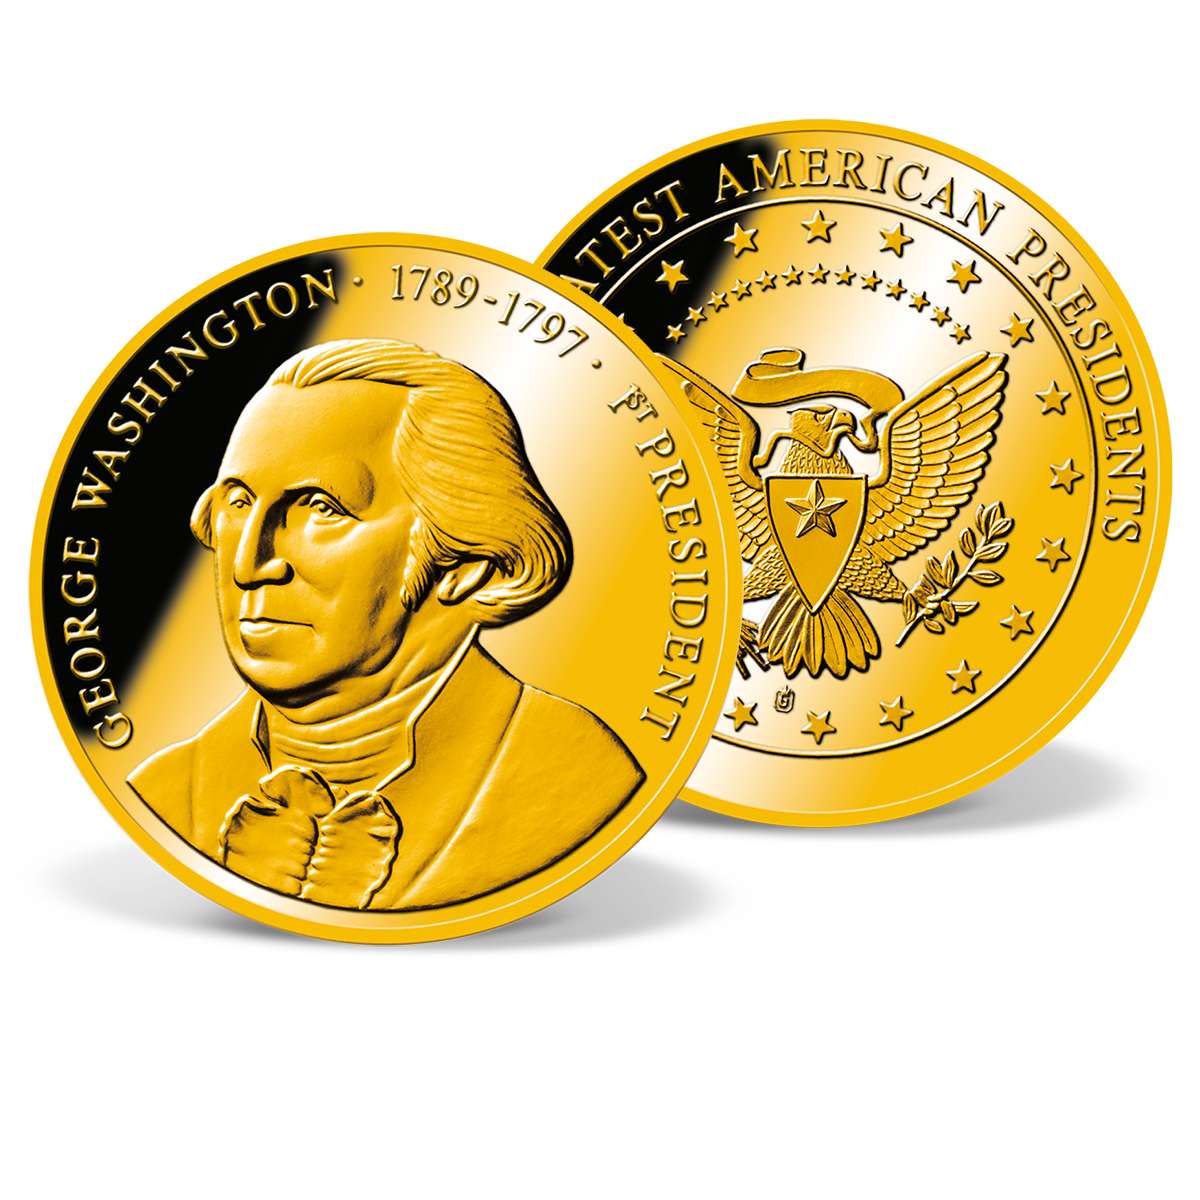 George Washington Commemorative Coin, Gold-Layered, Gold